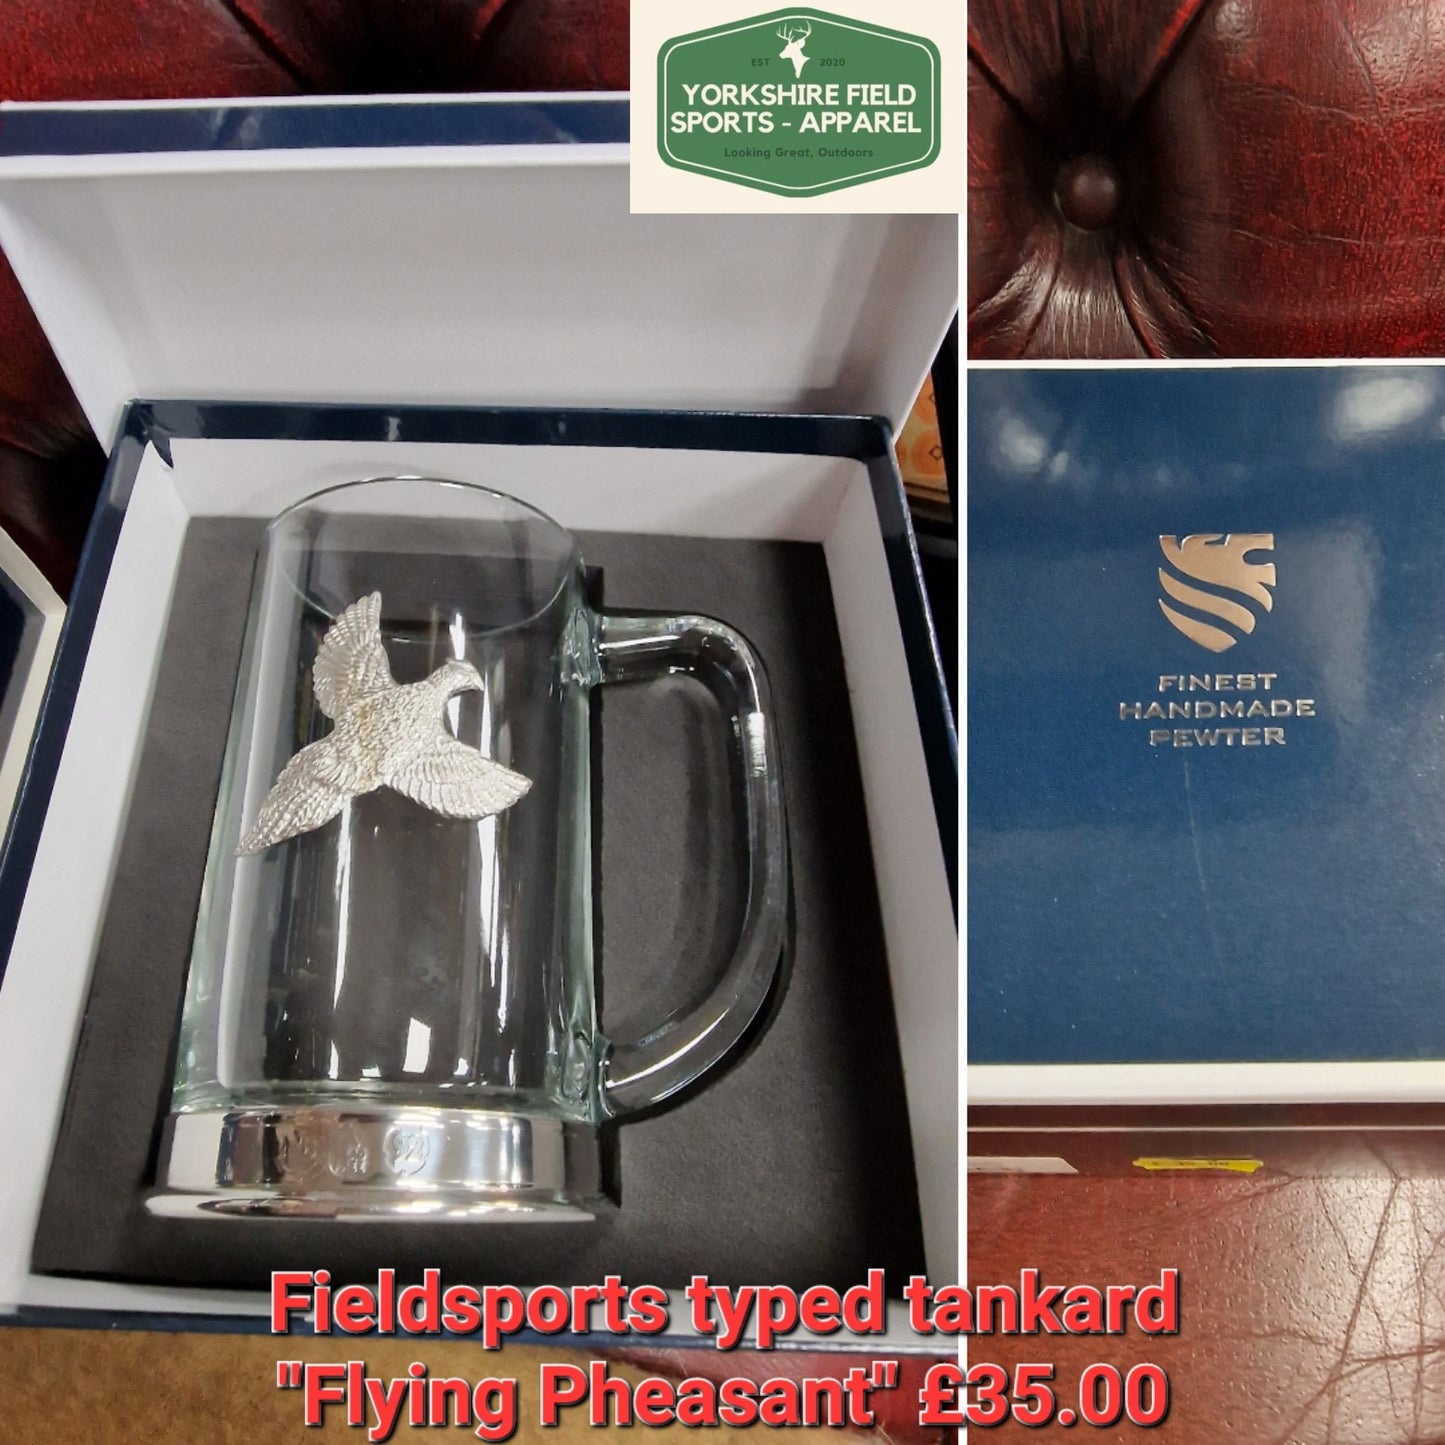 Handmade Fieldsports Tankard in presentation box great gift idea